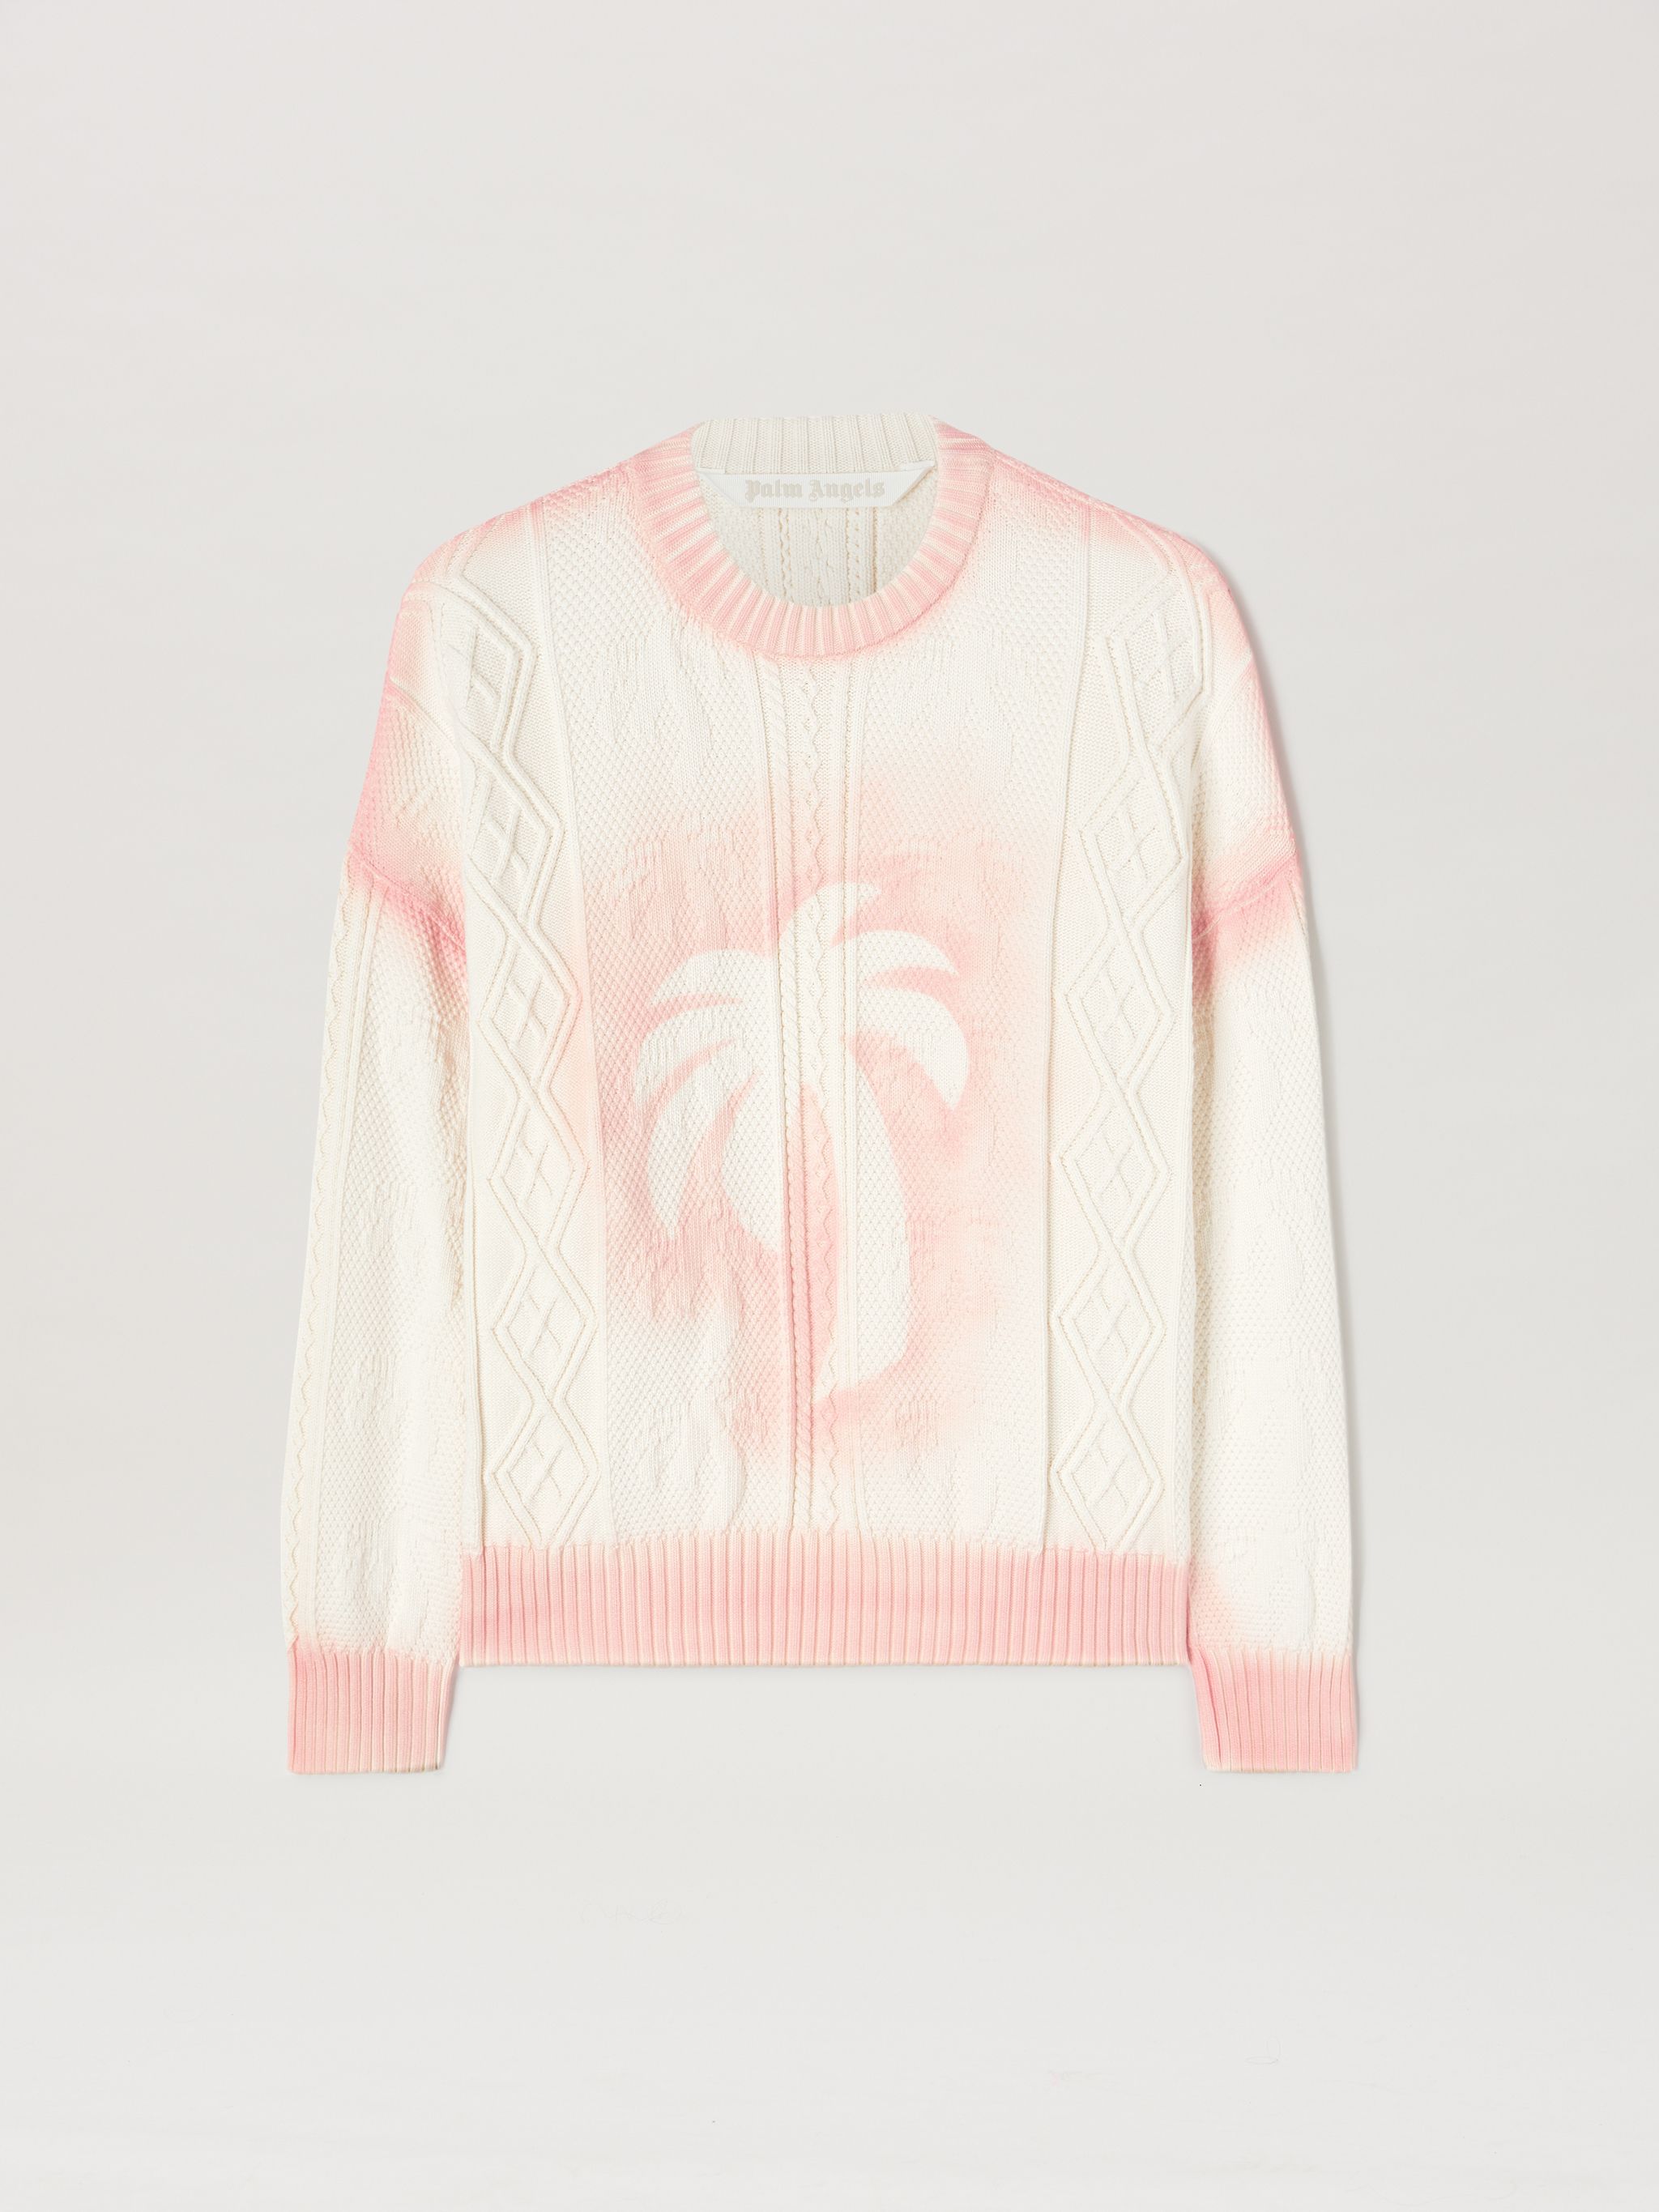 Sprayed Palm Fisherman Sweater